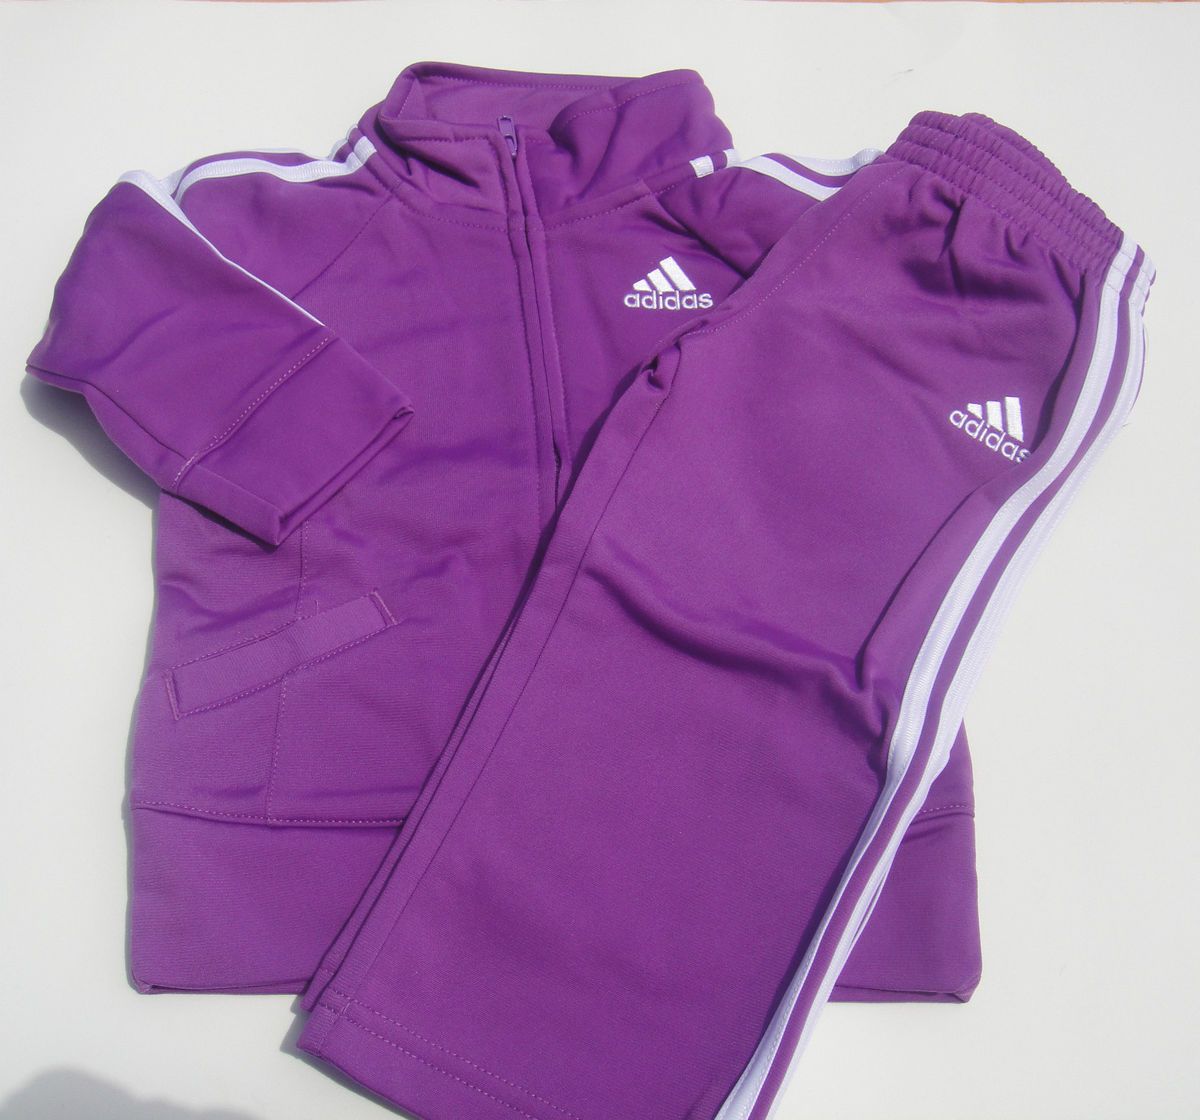 Adidas Girls Track Suit Jacket Top Pants Dark Purple 501 Warm Up 12 18 